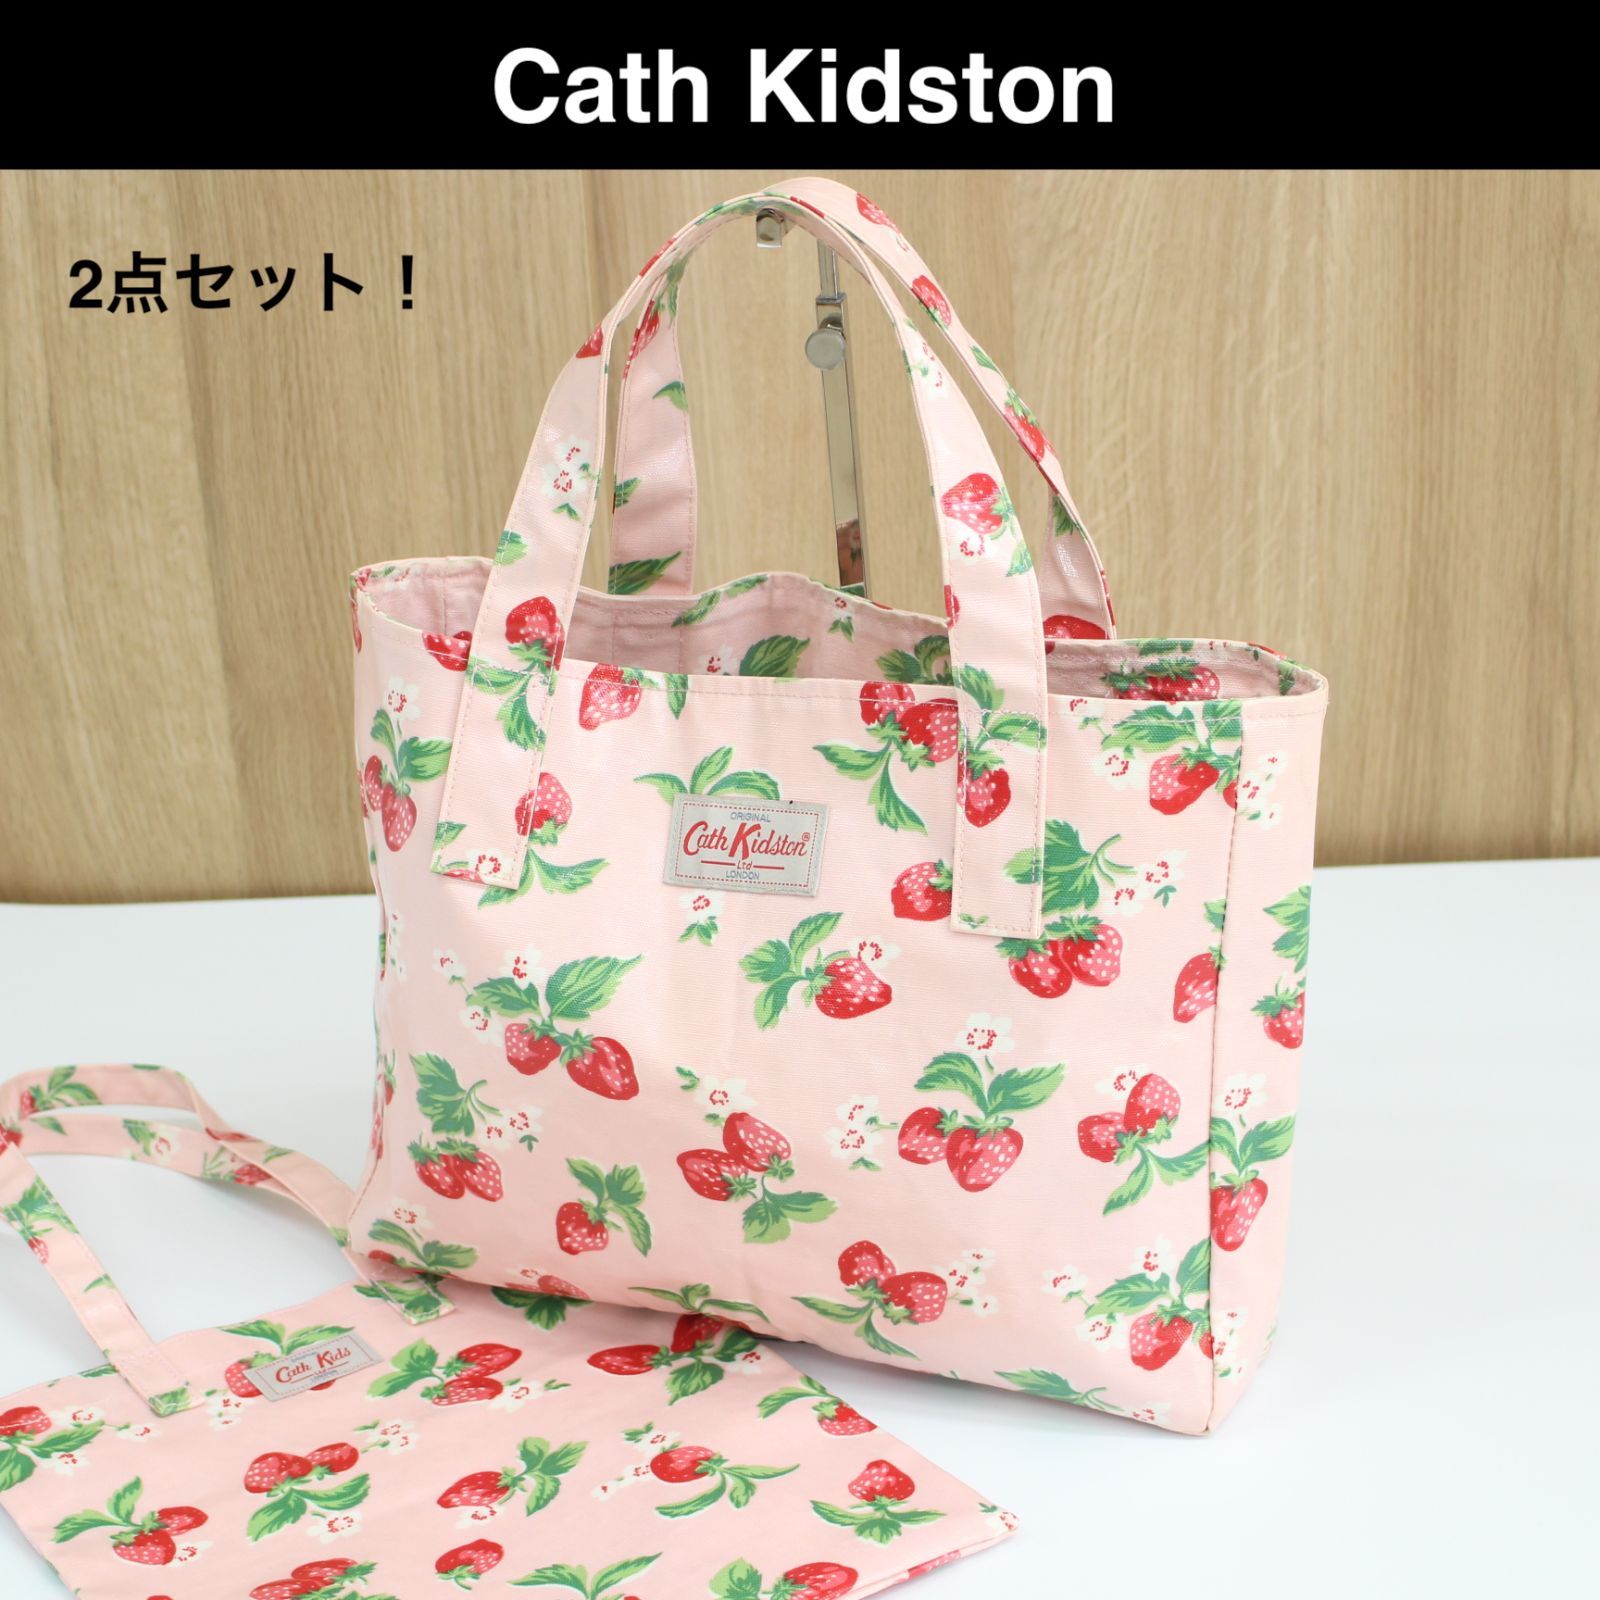 A902】Cath Kidston トートバッグ イチゴ柄 2点セット - 【ショップ